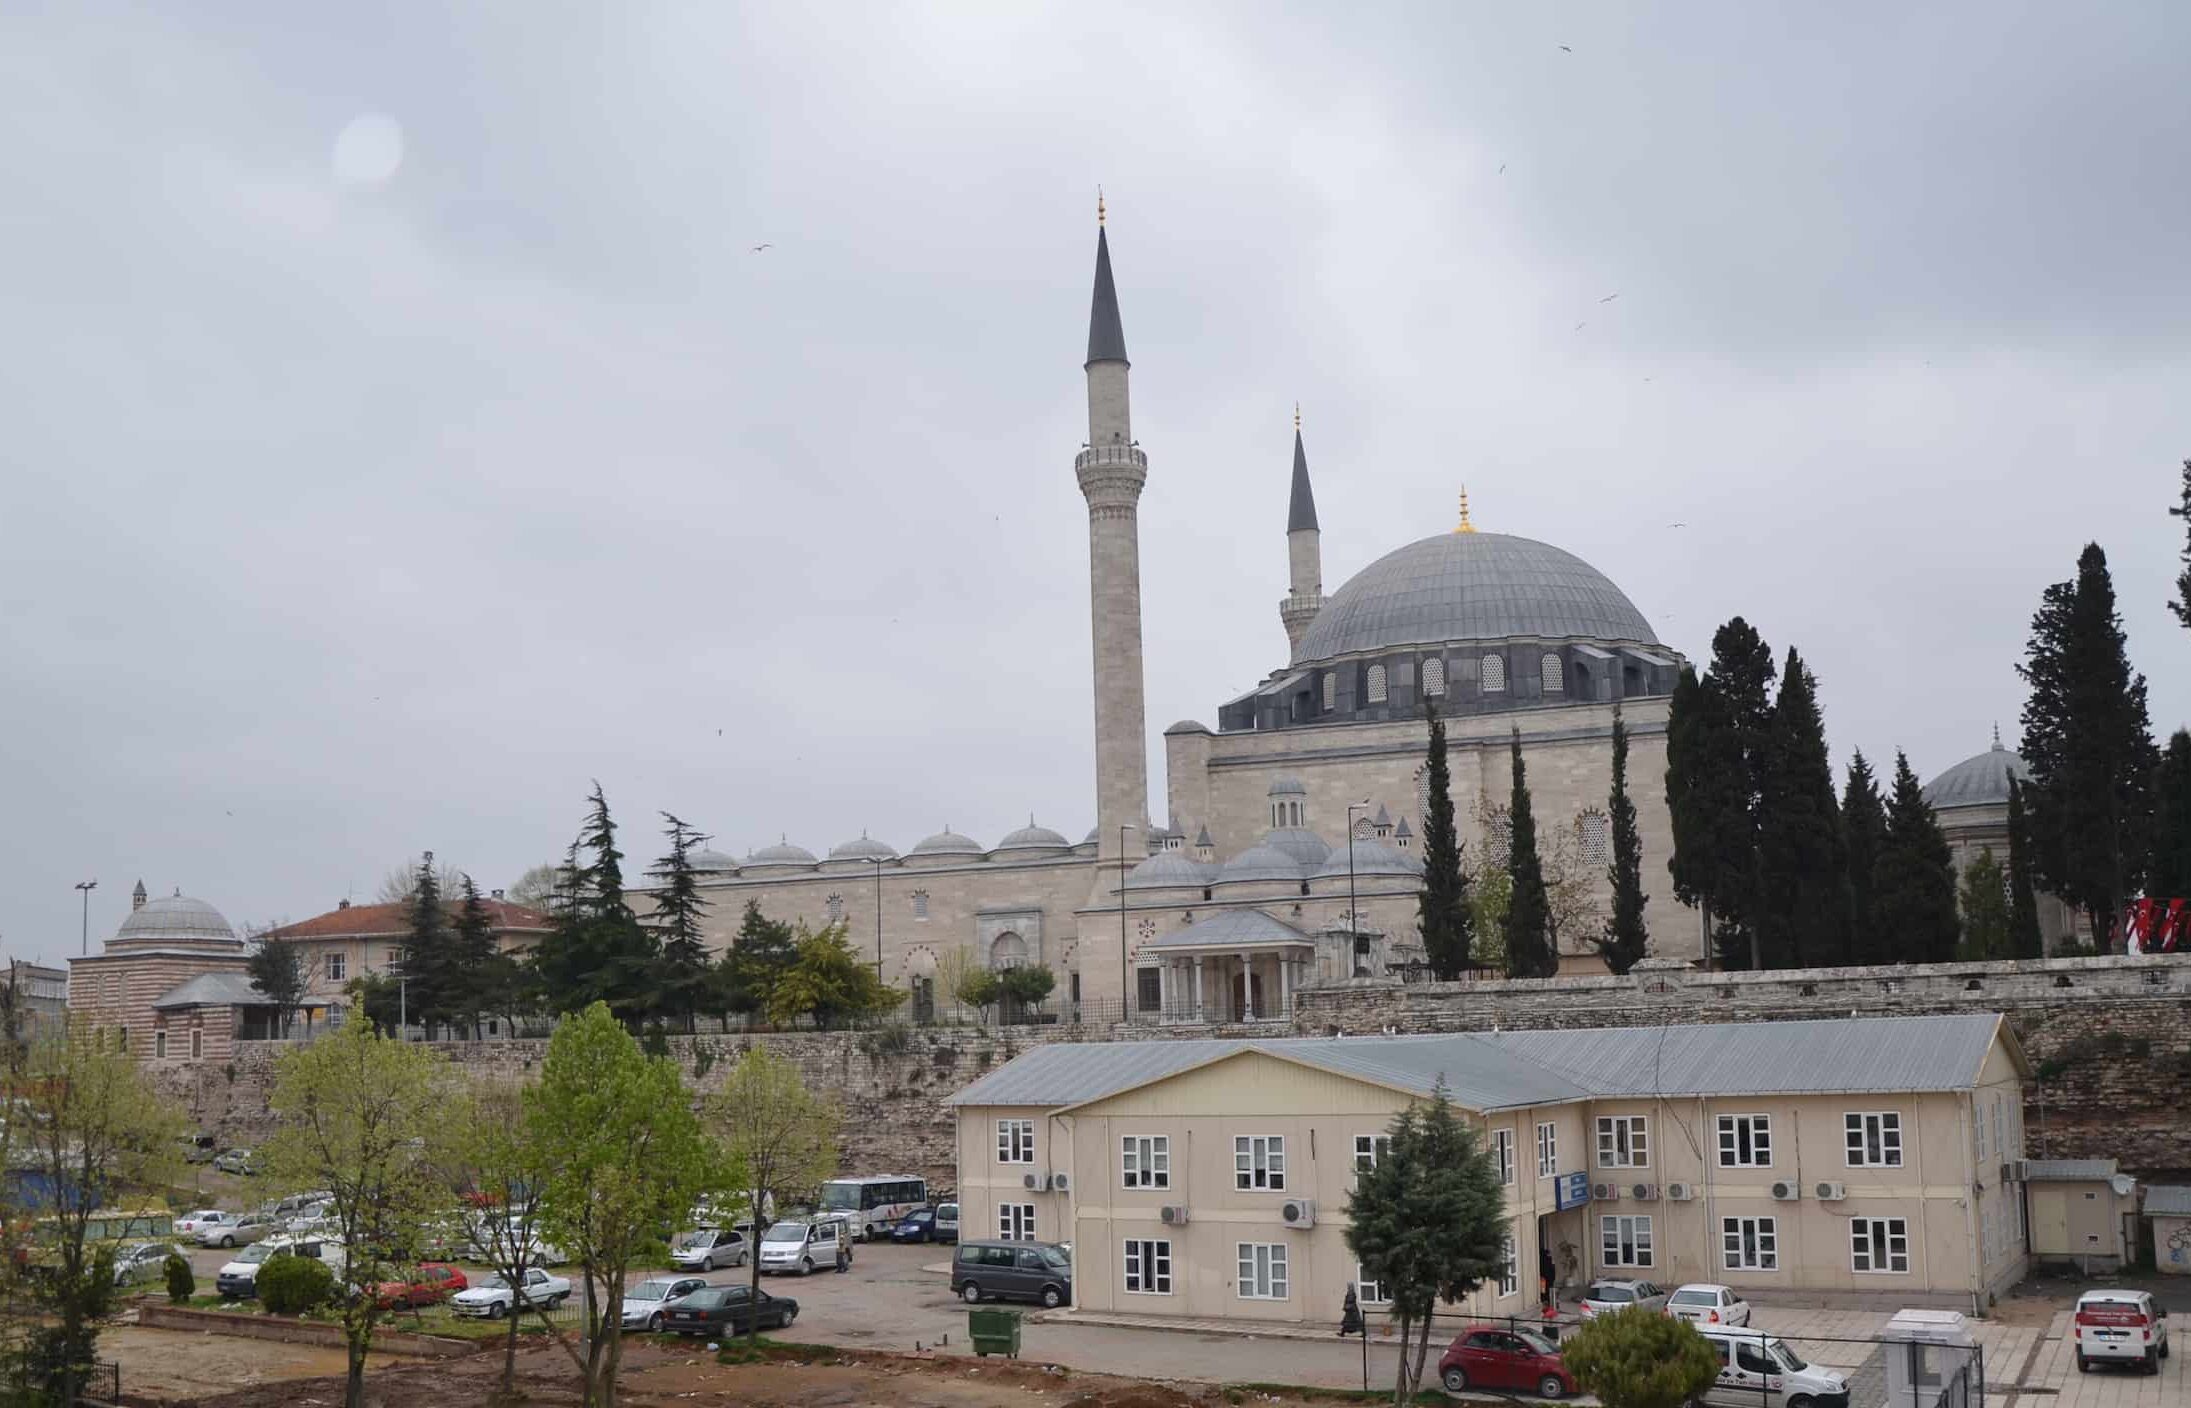 Yavuz Selim Mosque in Istanbul, Turkey